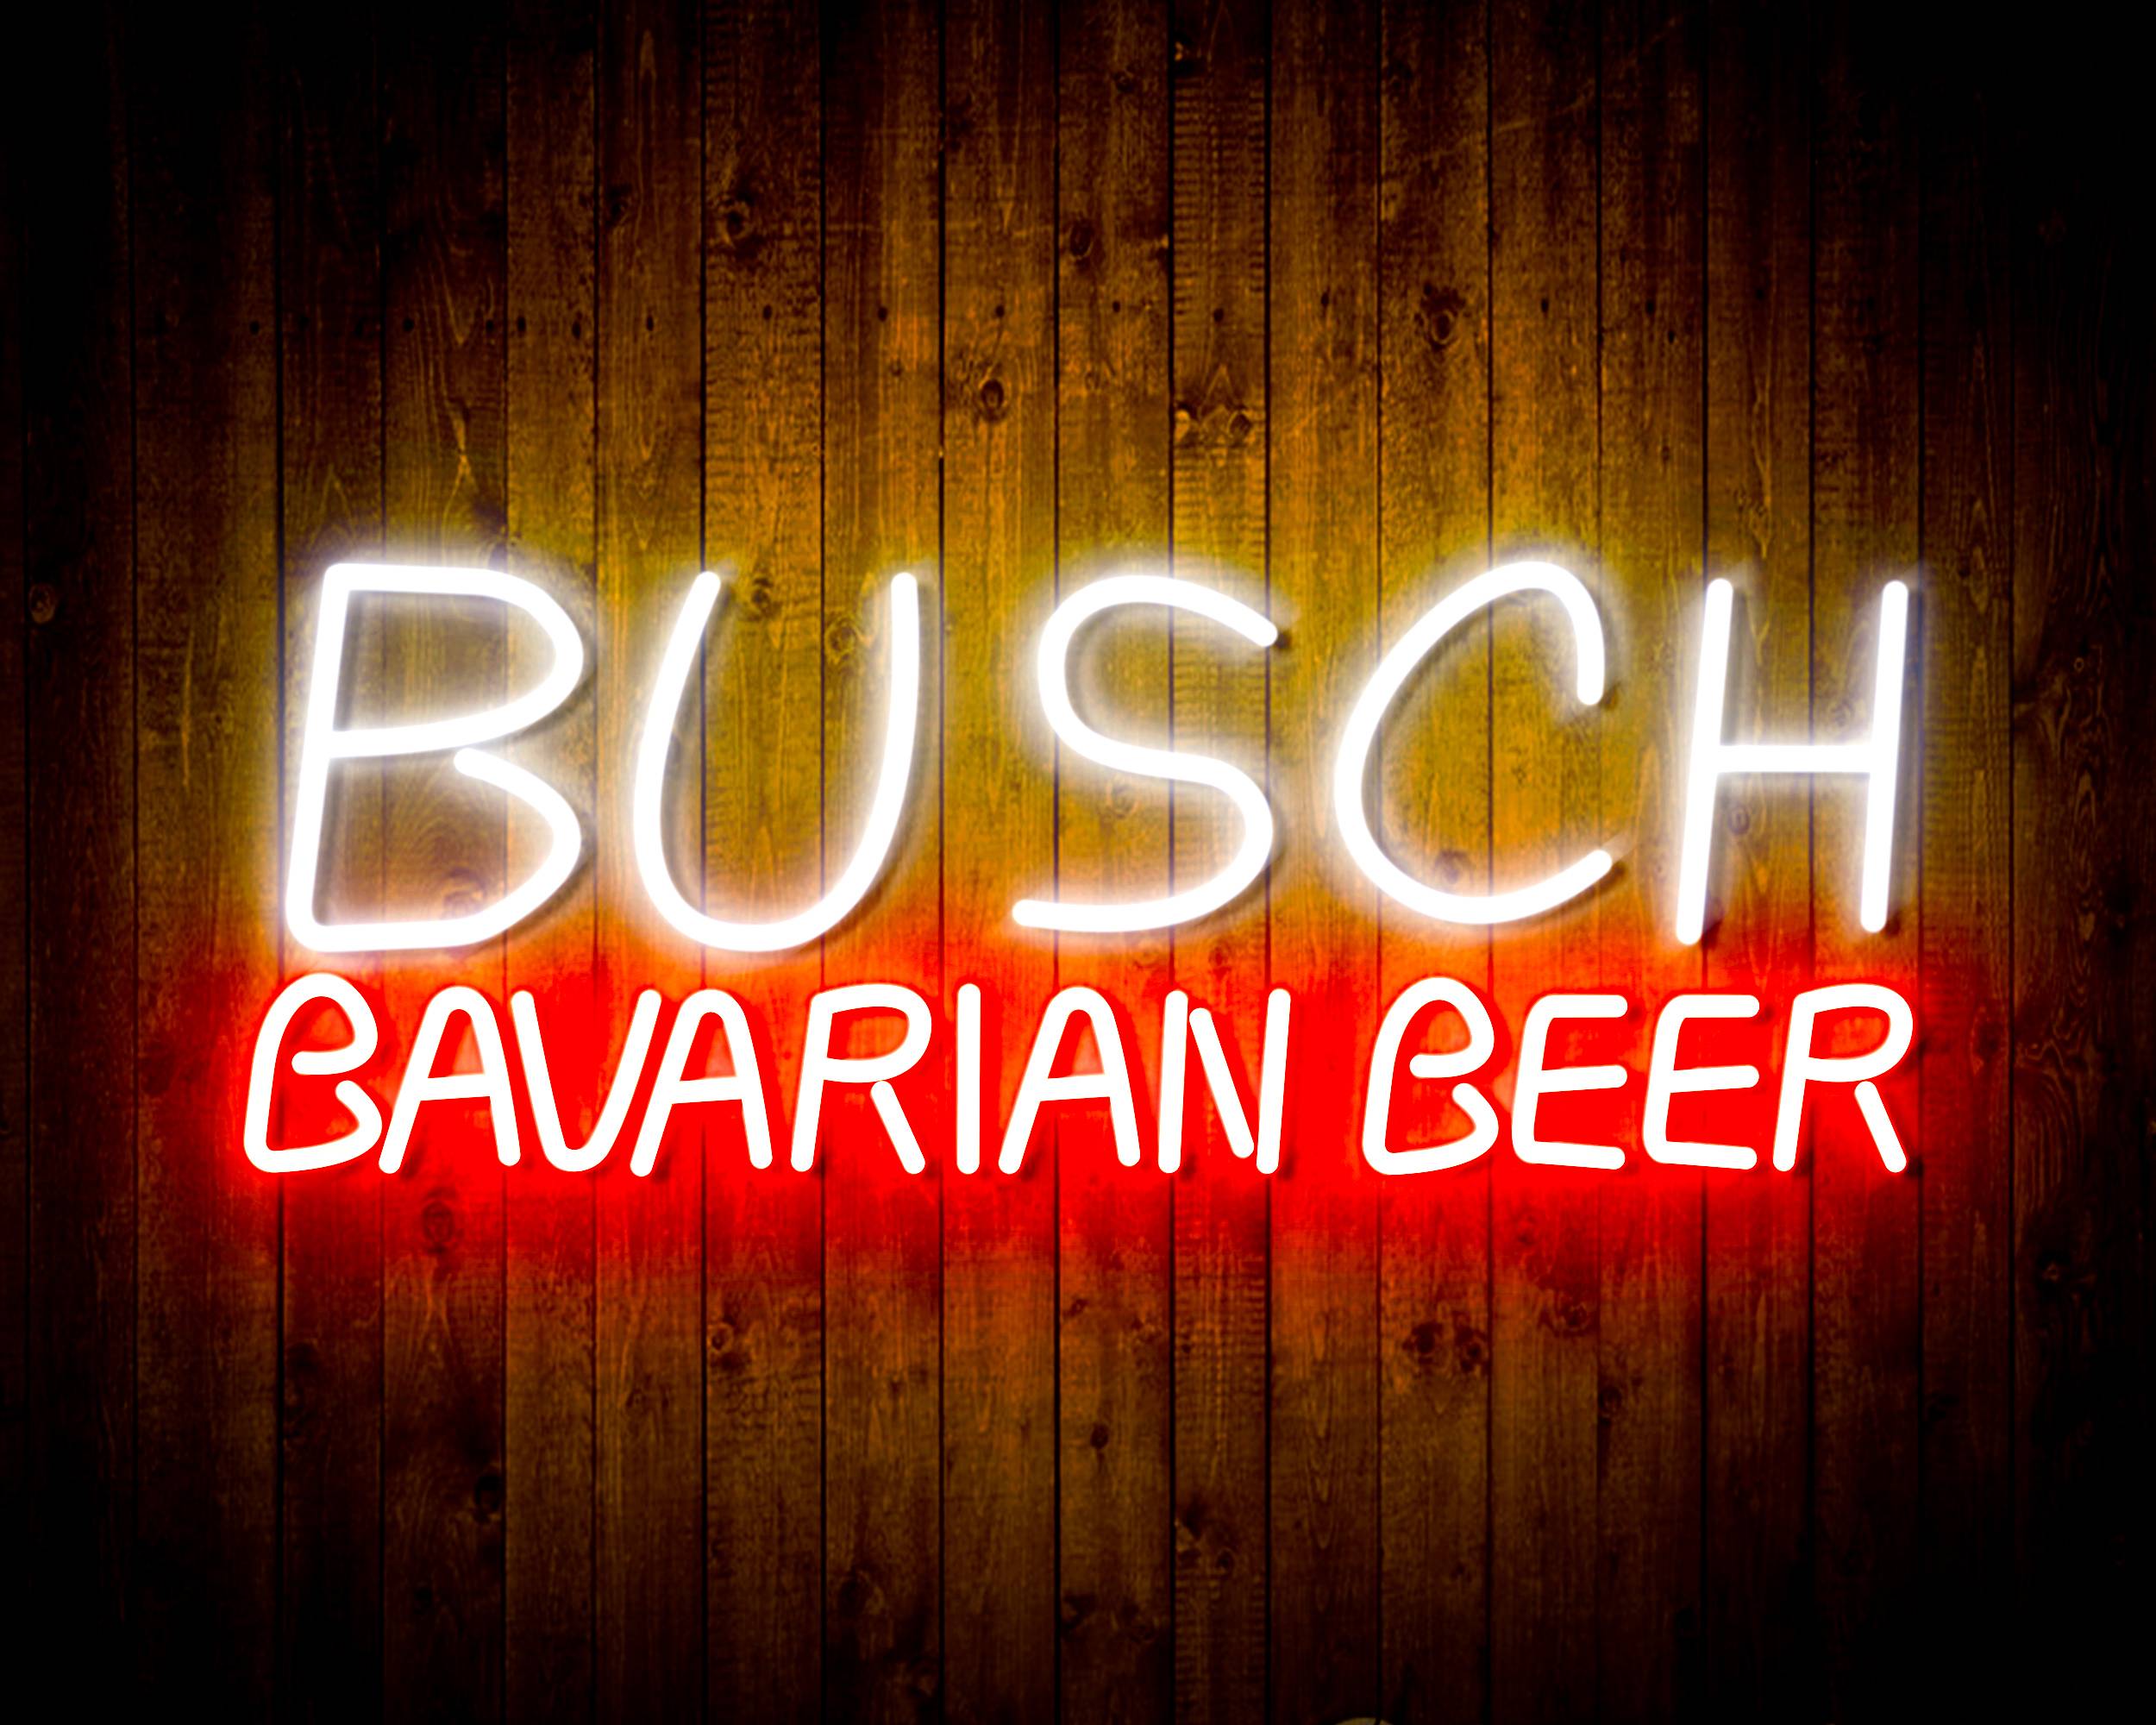 Busch Bavarian Beer Handmade LED Neon Light Sign